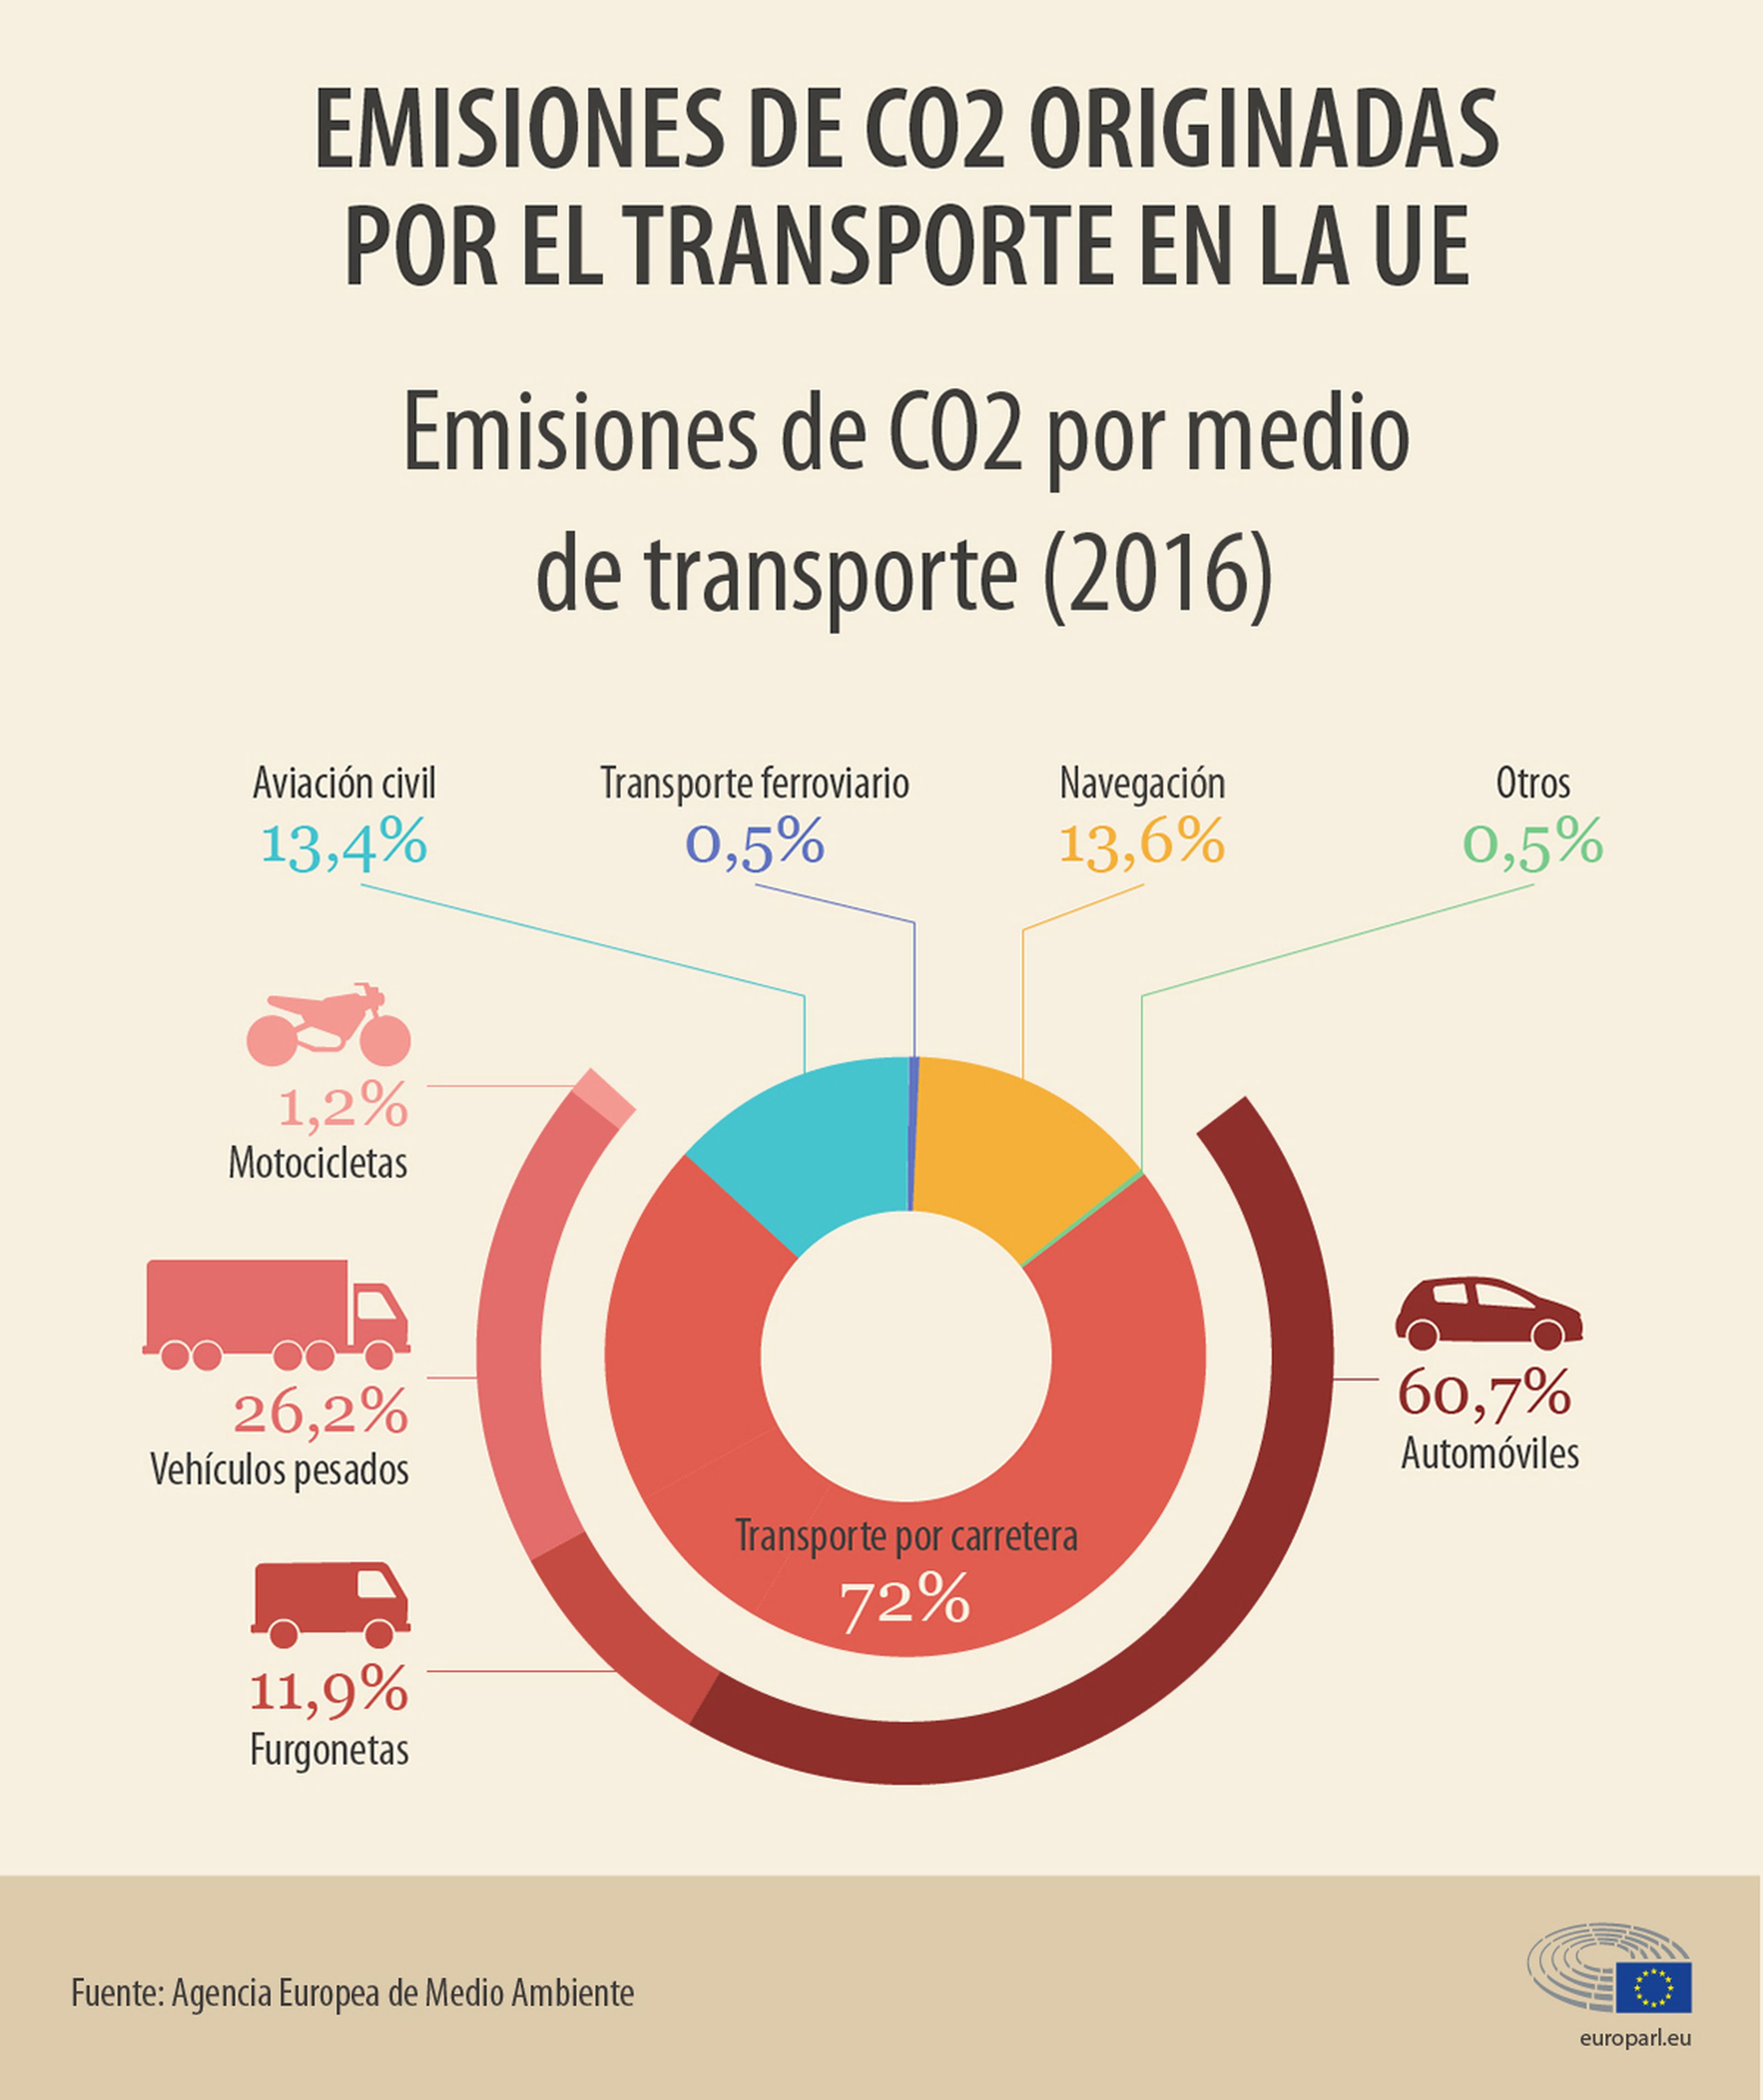 Emisiones de CO2 del transporte or carretera